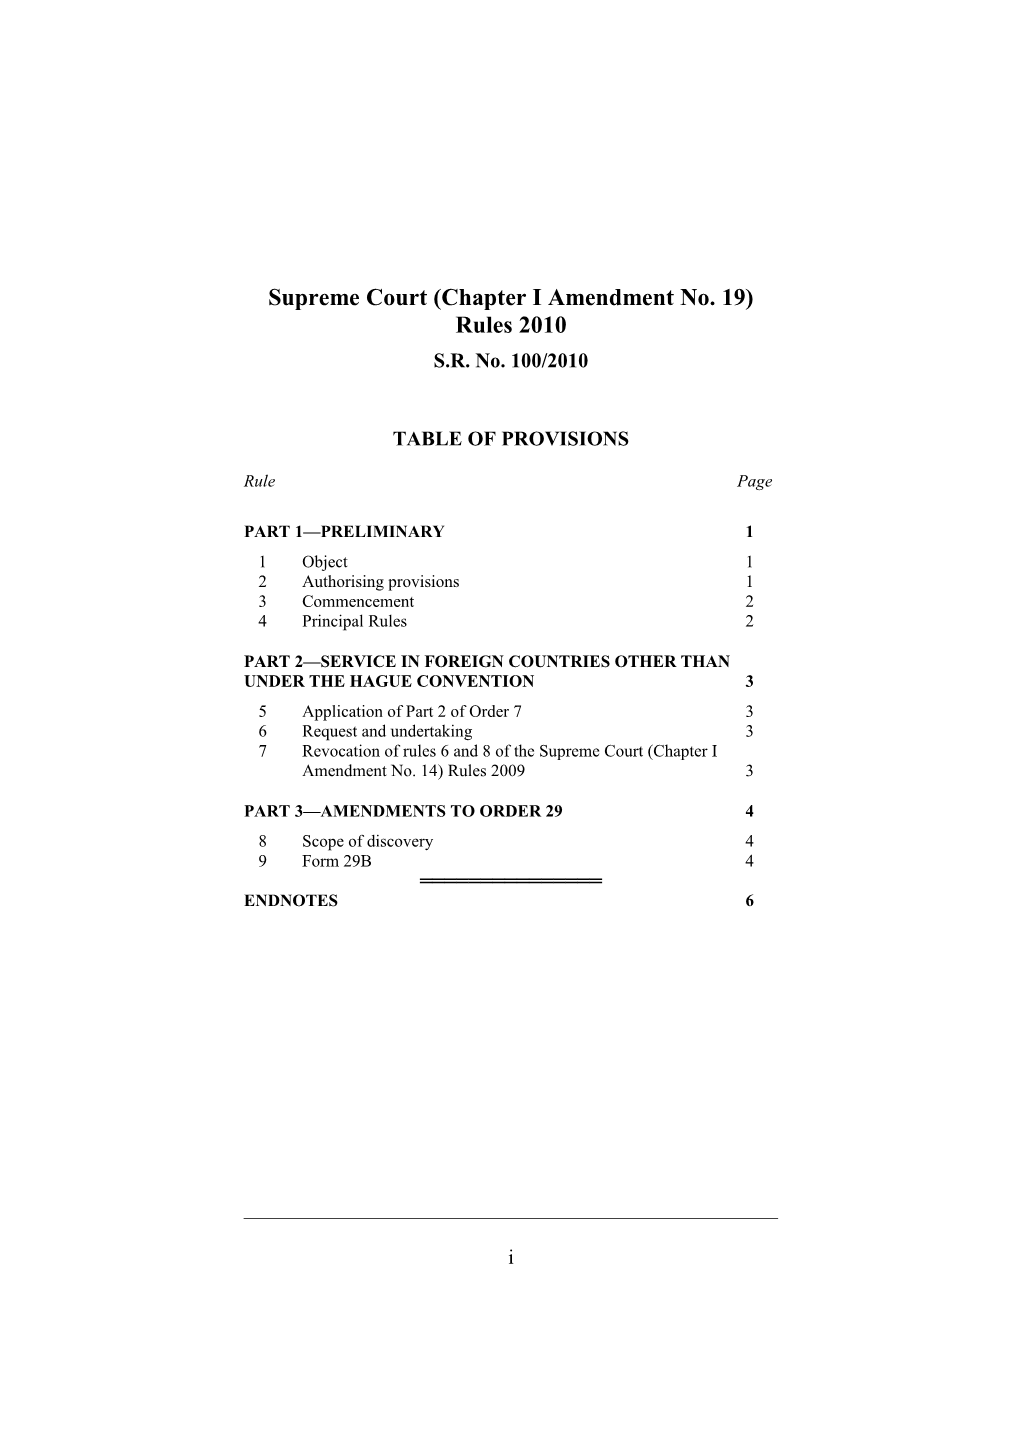 Supreme Court (Chapter I Amendment No. 19) Rules 2010